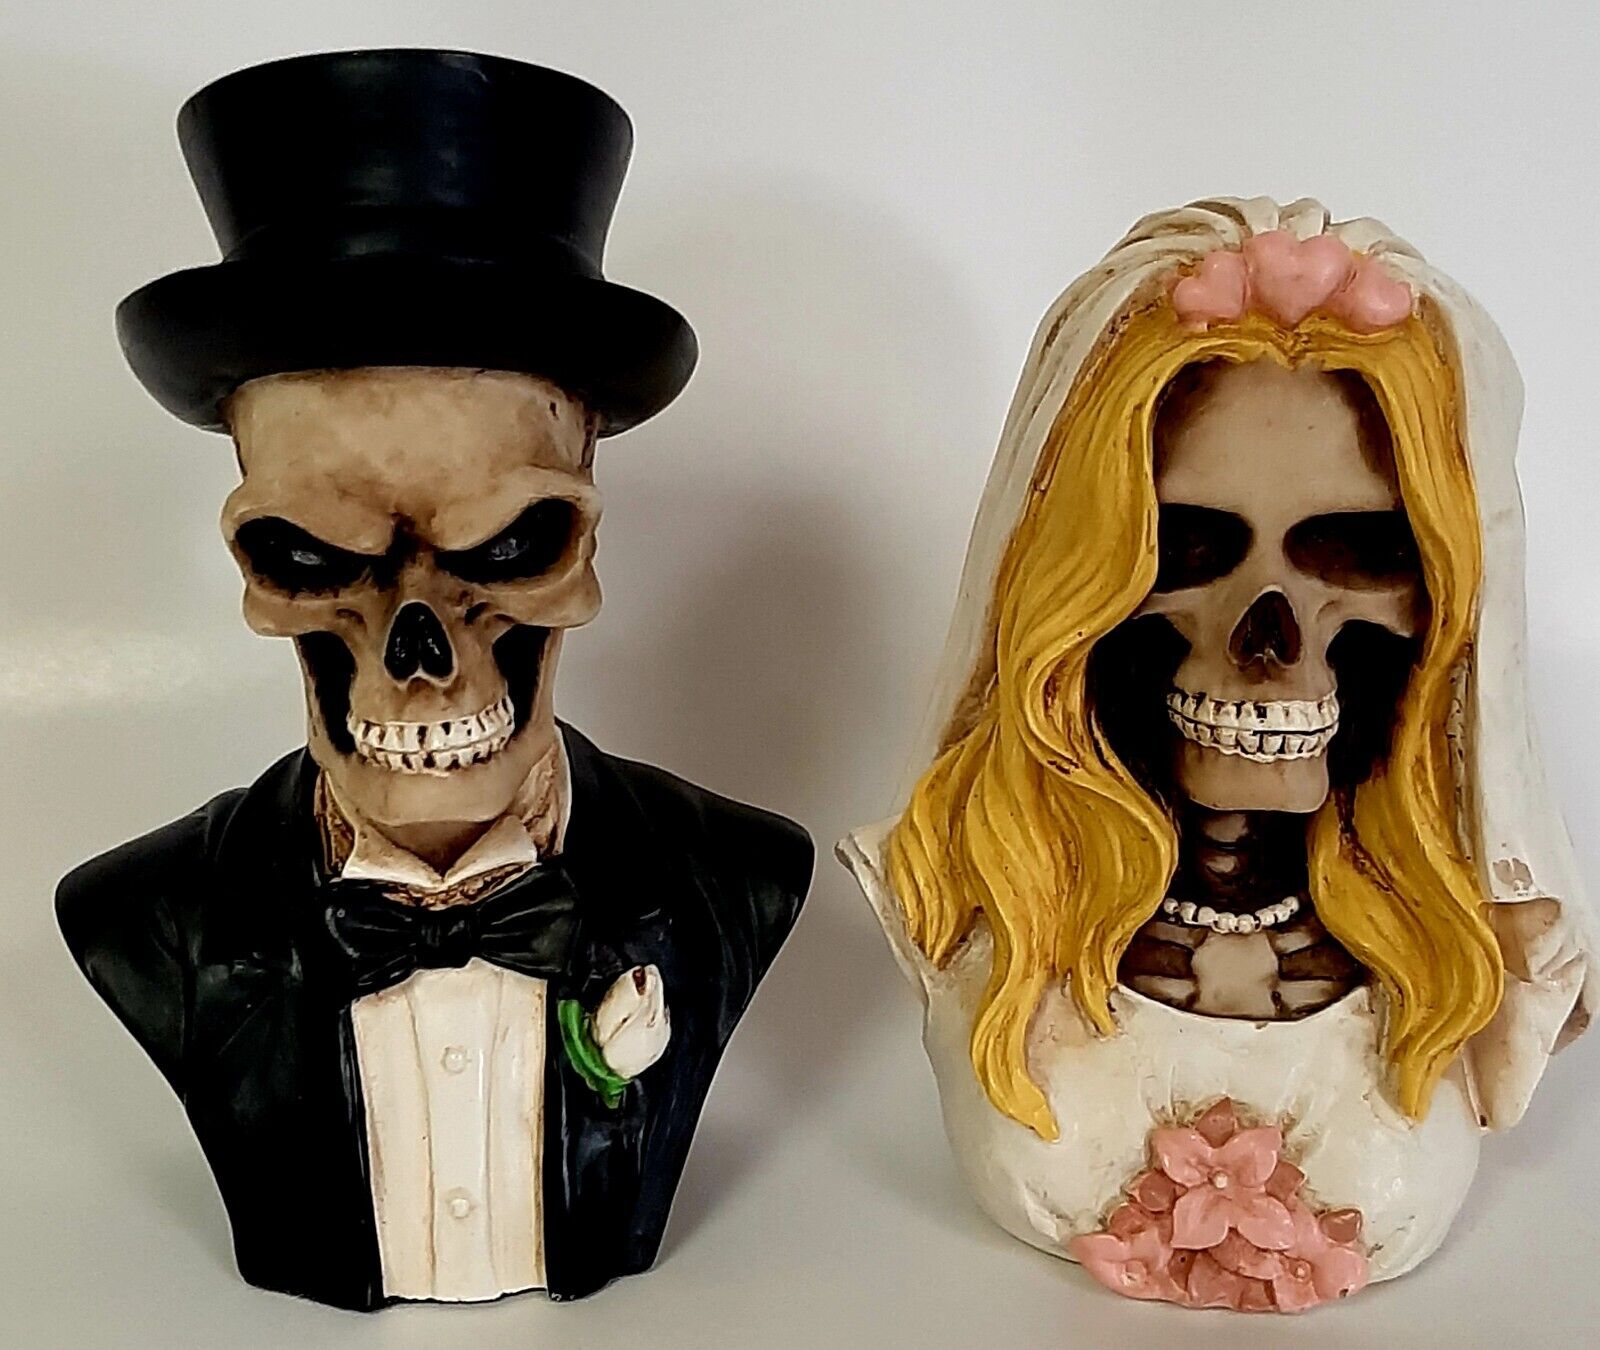 Skeleton Bride & Groom Skull/bust Figurines By Summit Collections